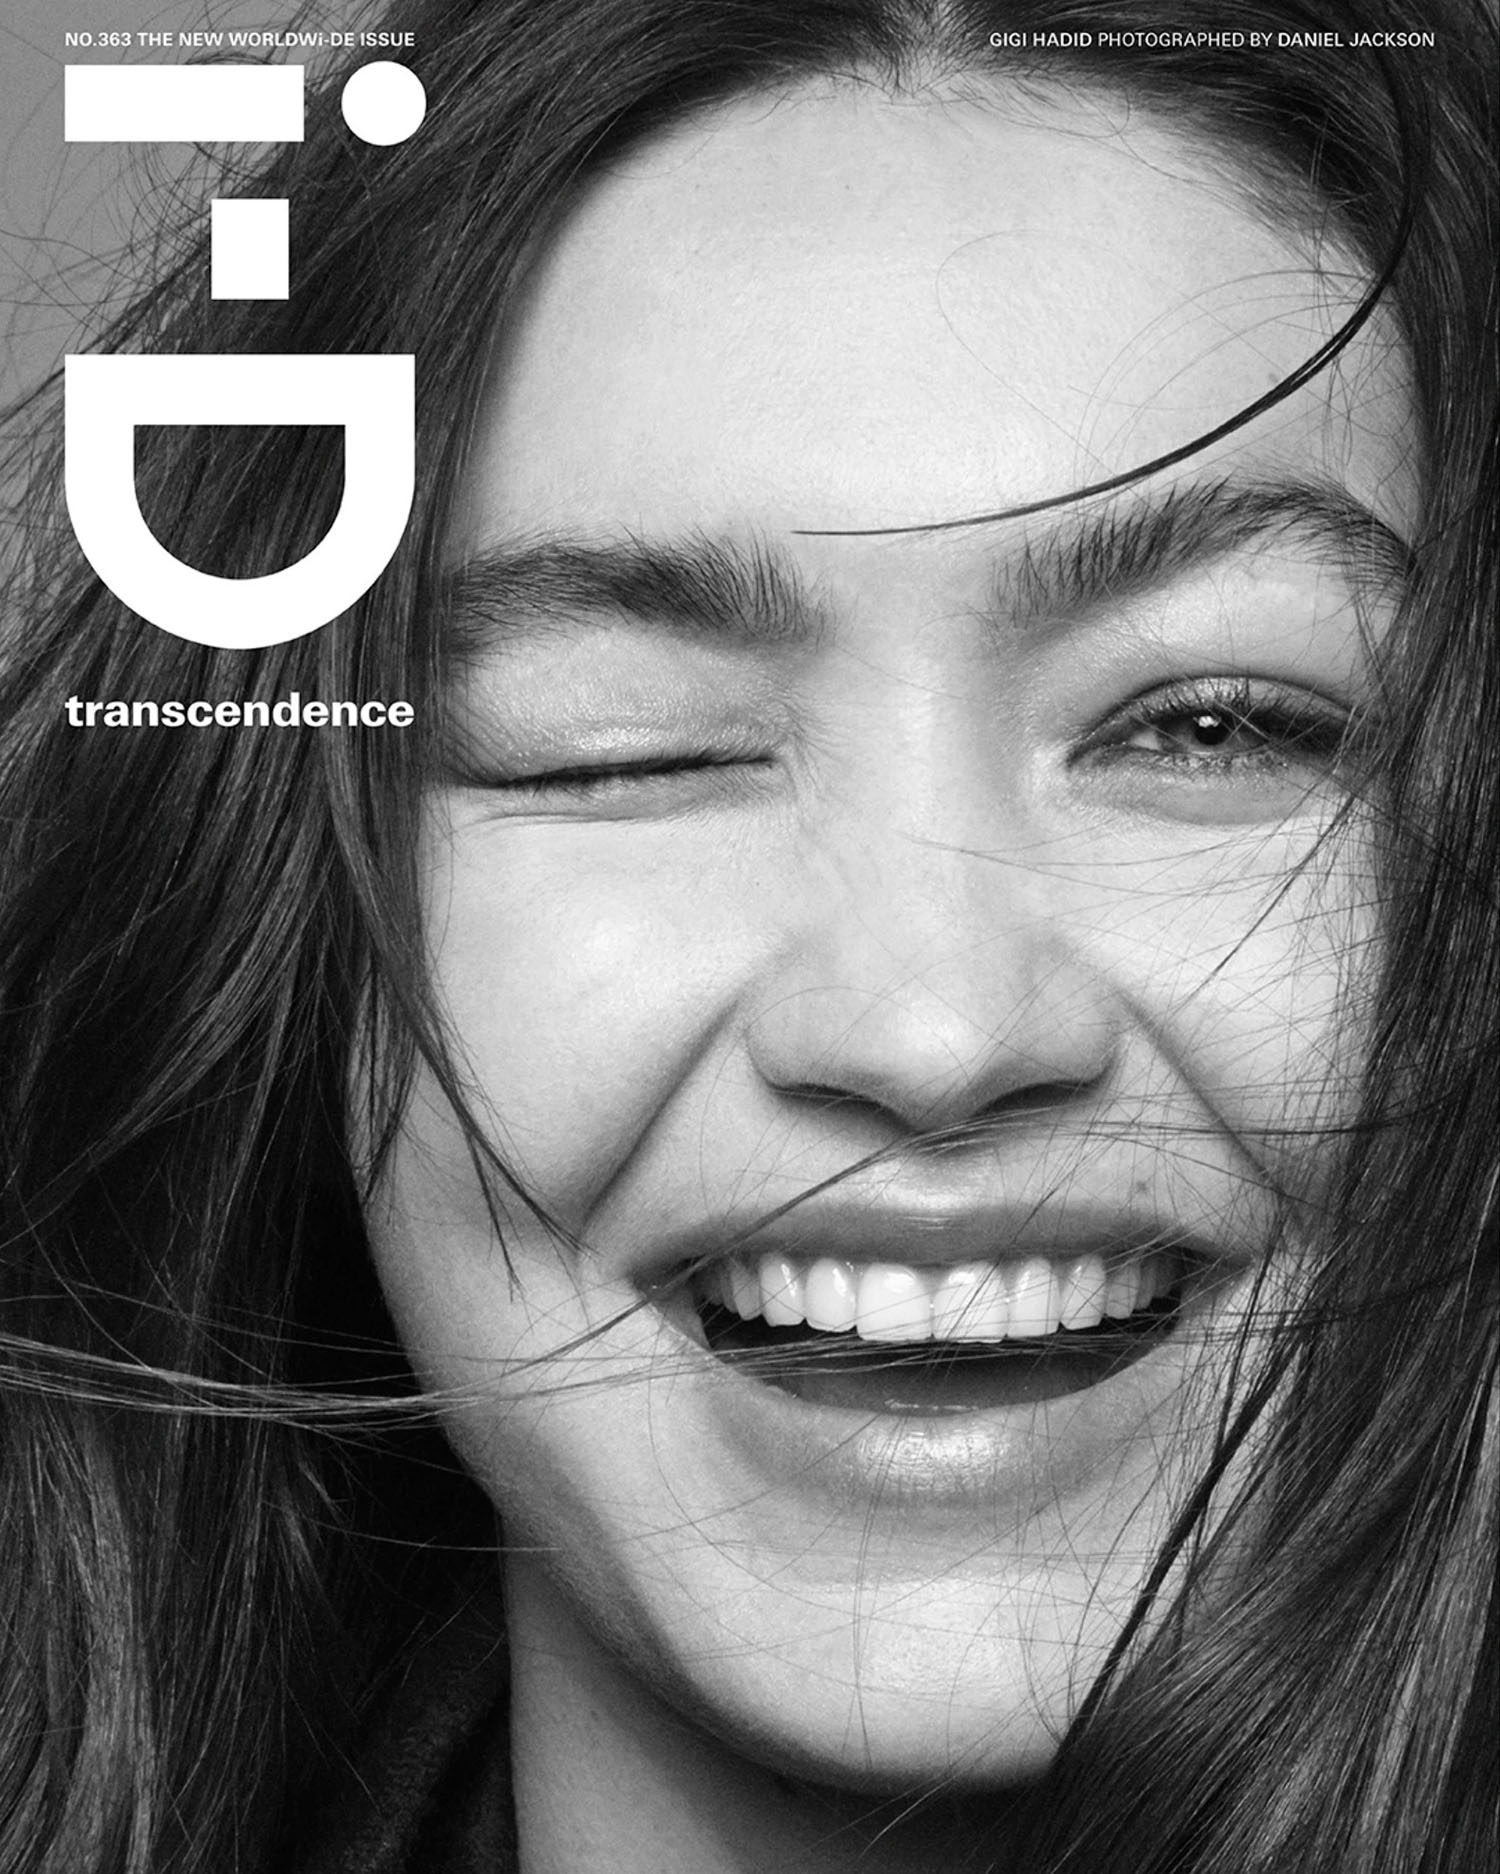 Gigi Hadid covers i-D Magazine Issue 363 by Daniel Jackson